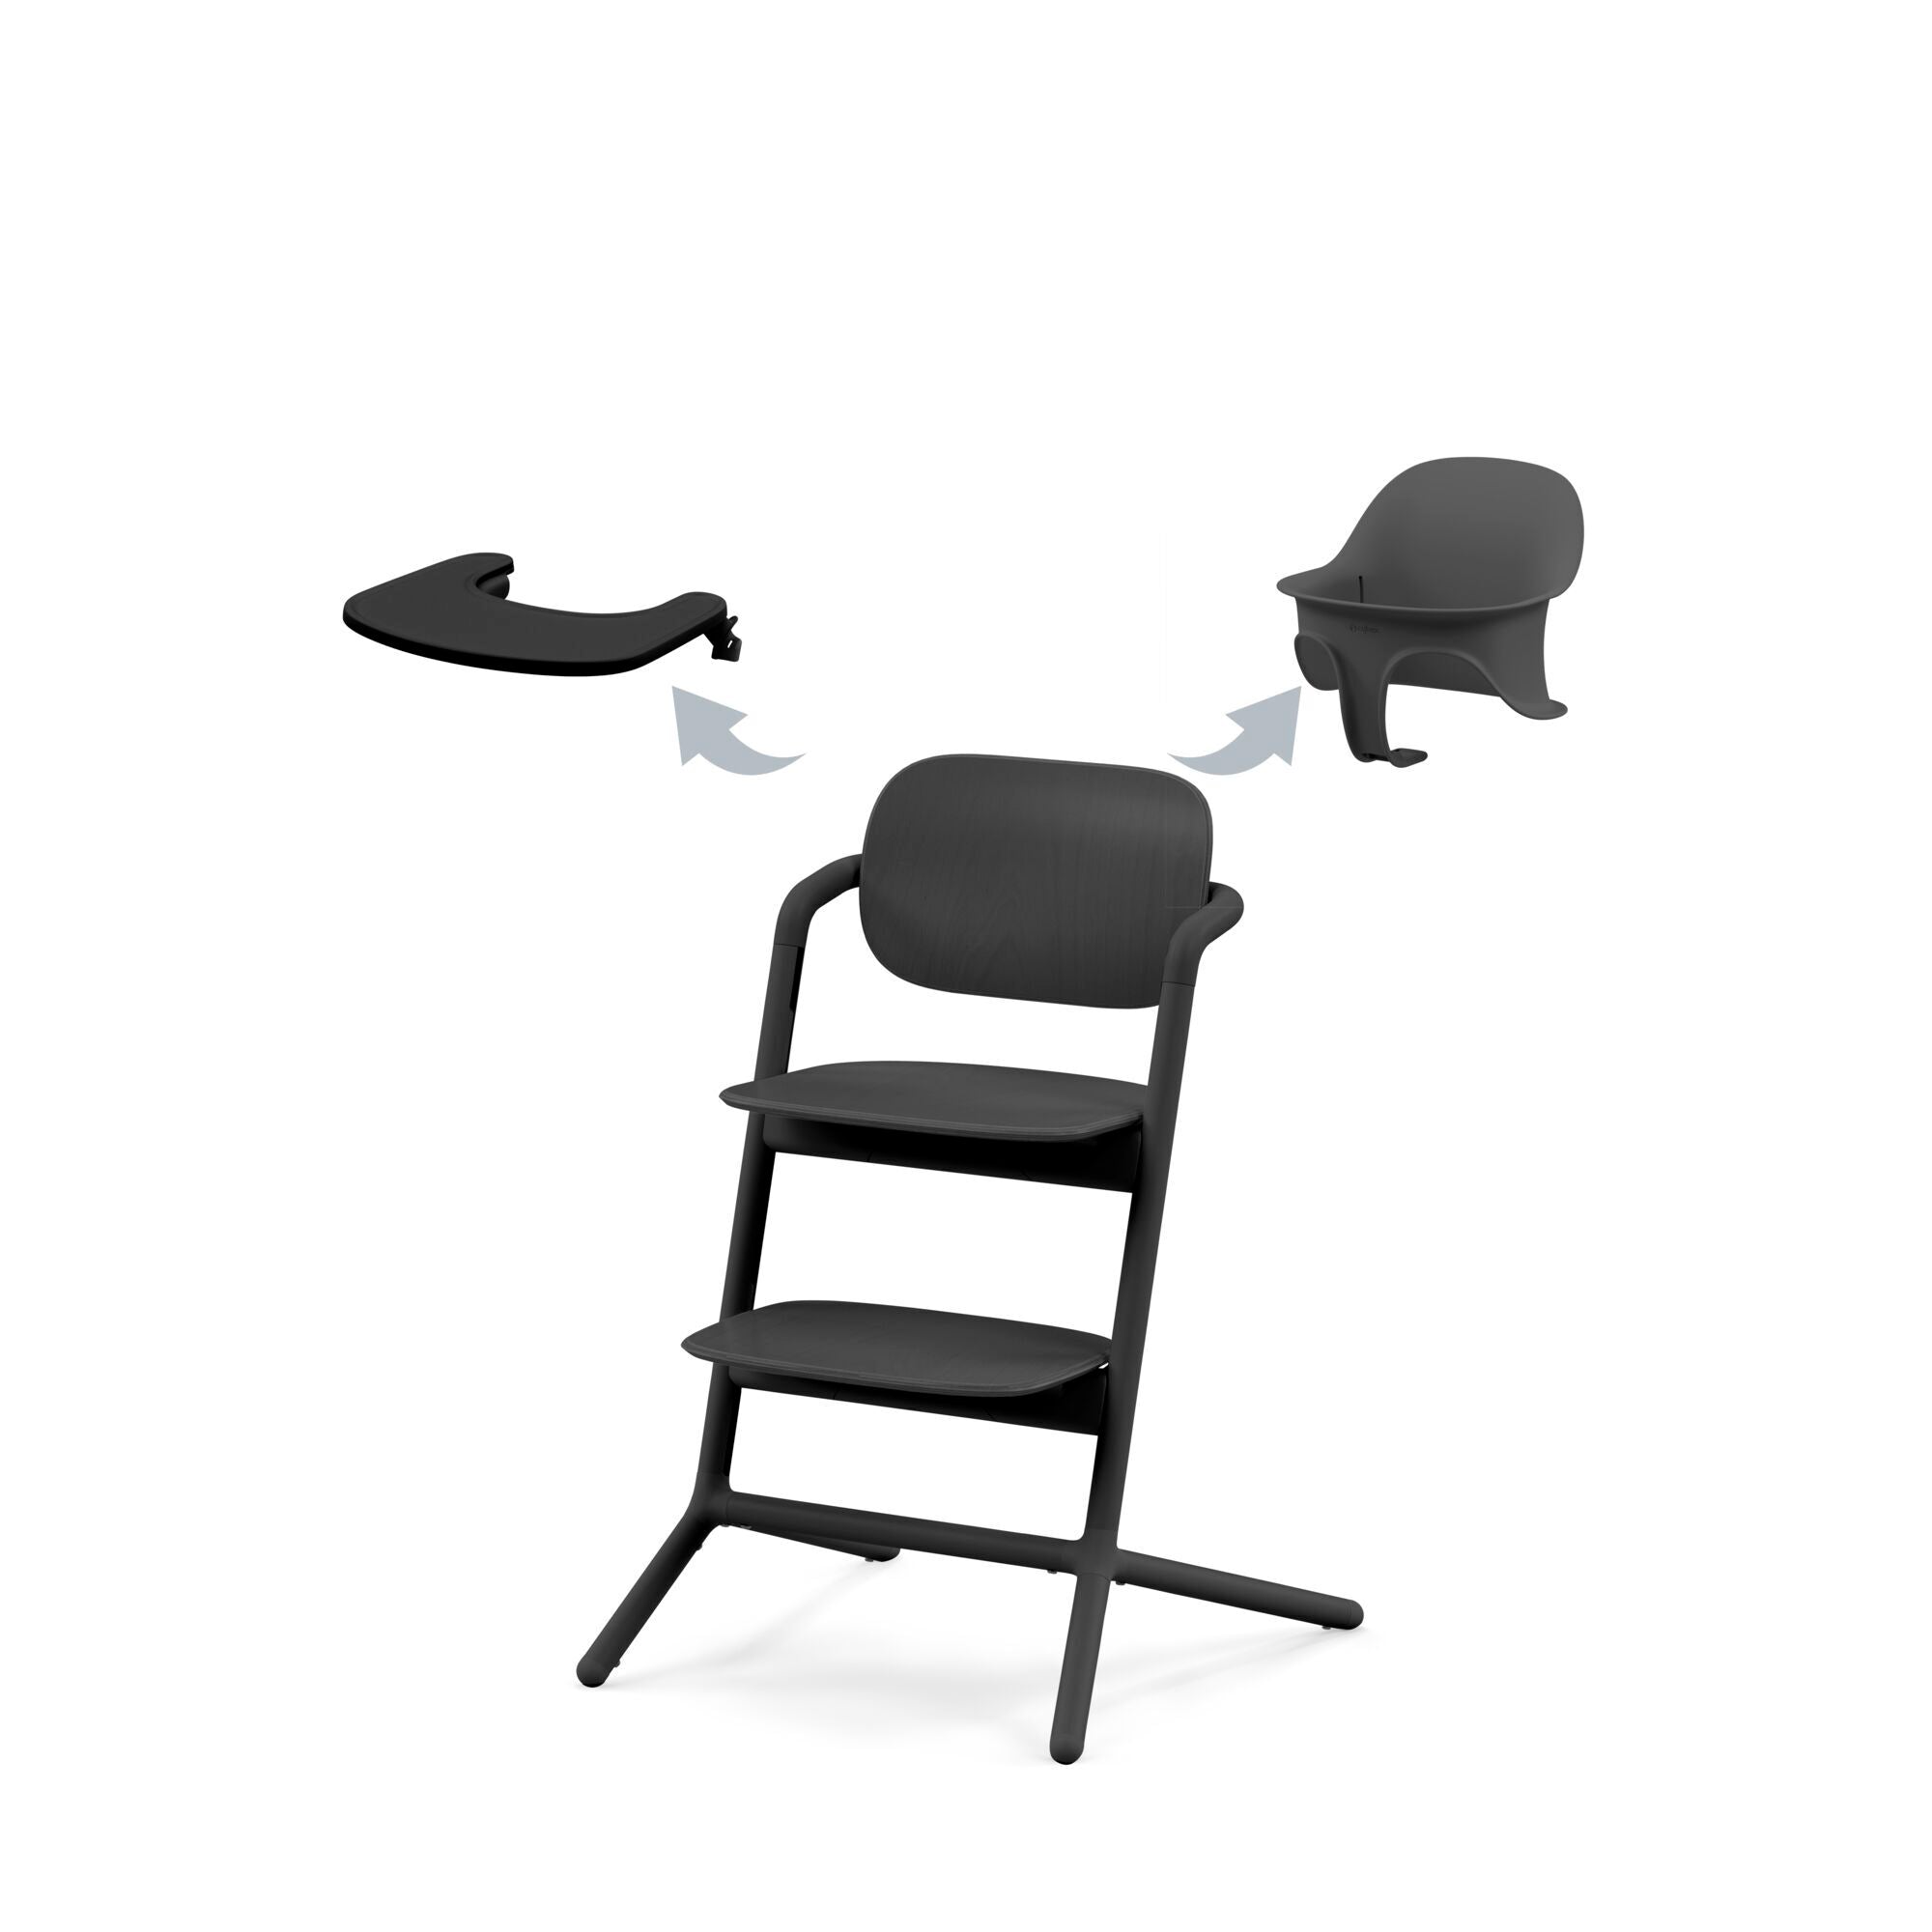 Cybex Lemo 2 High Chair 3-in-1 - ANB Baby -4063846197620$100 - $300